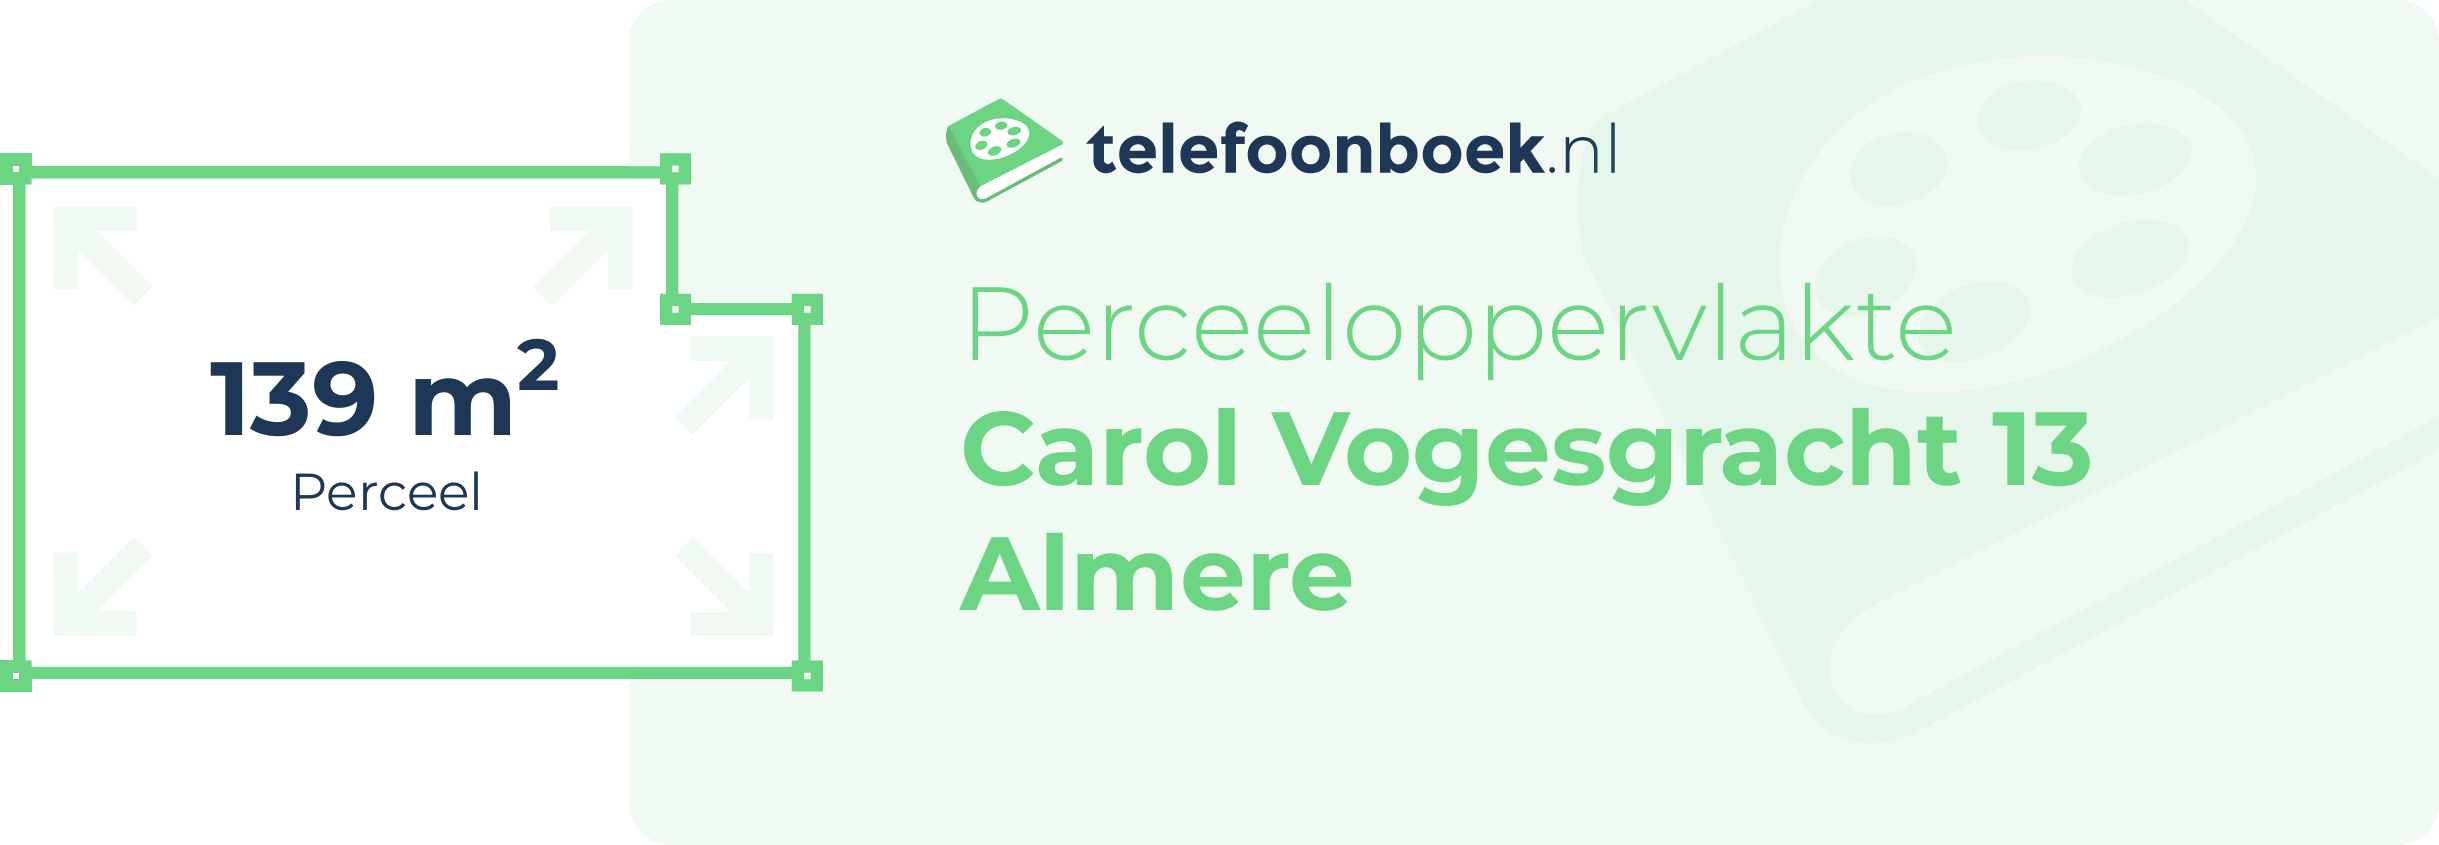 Perceeloppervlakte Carol Vogesgracht 13 Almere